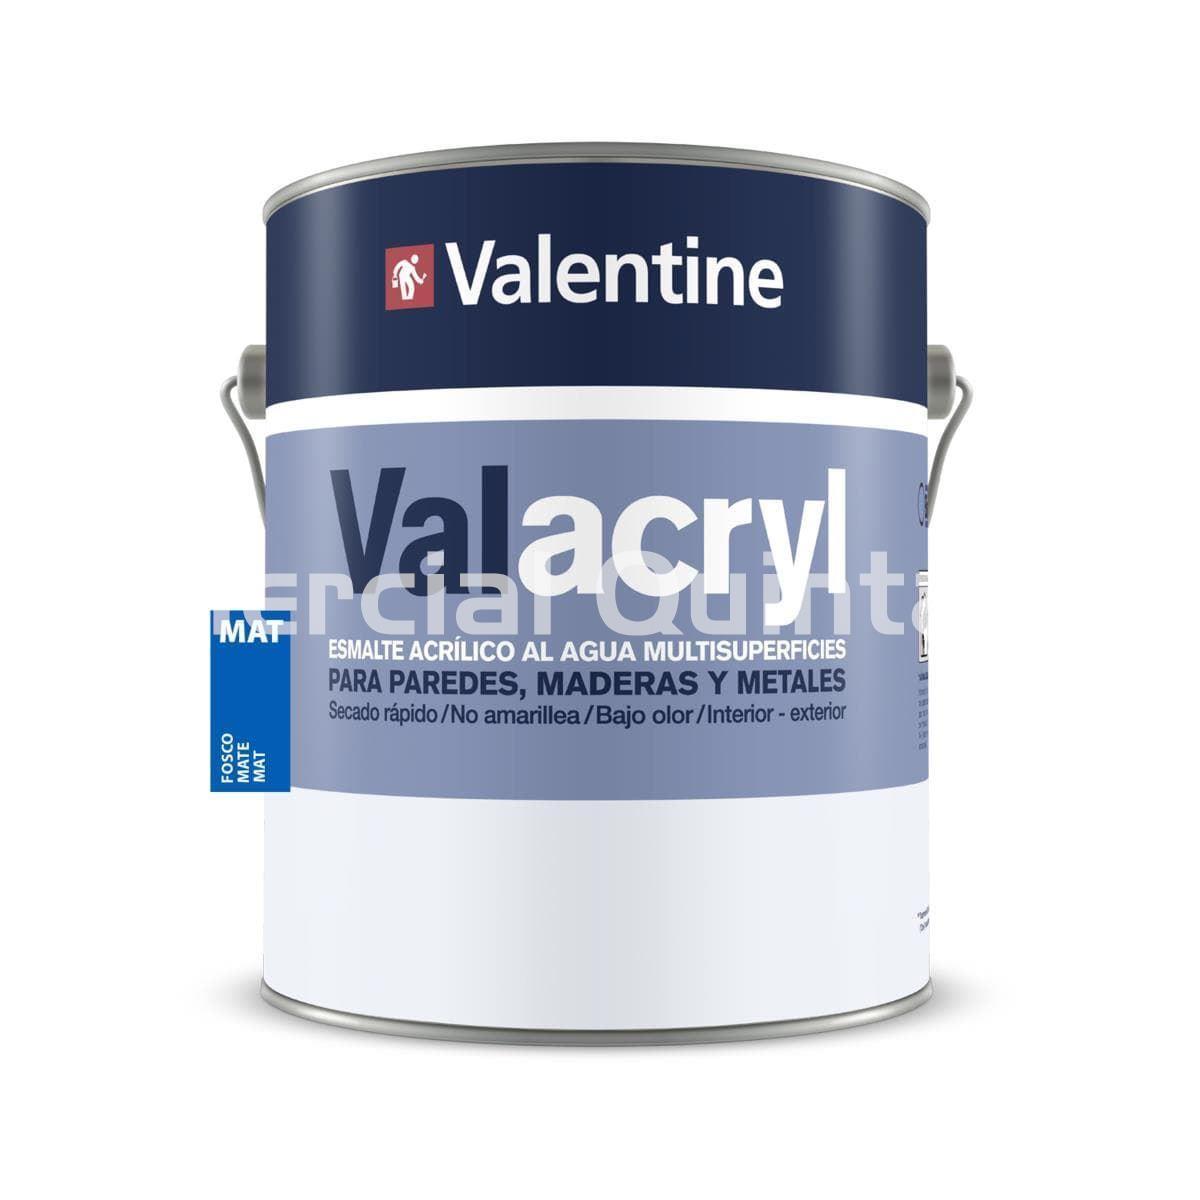 VALENTINE Valacryl esmalte al agu - Imagen 1